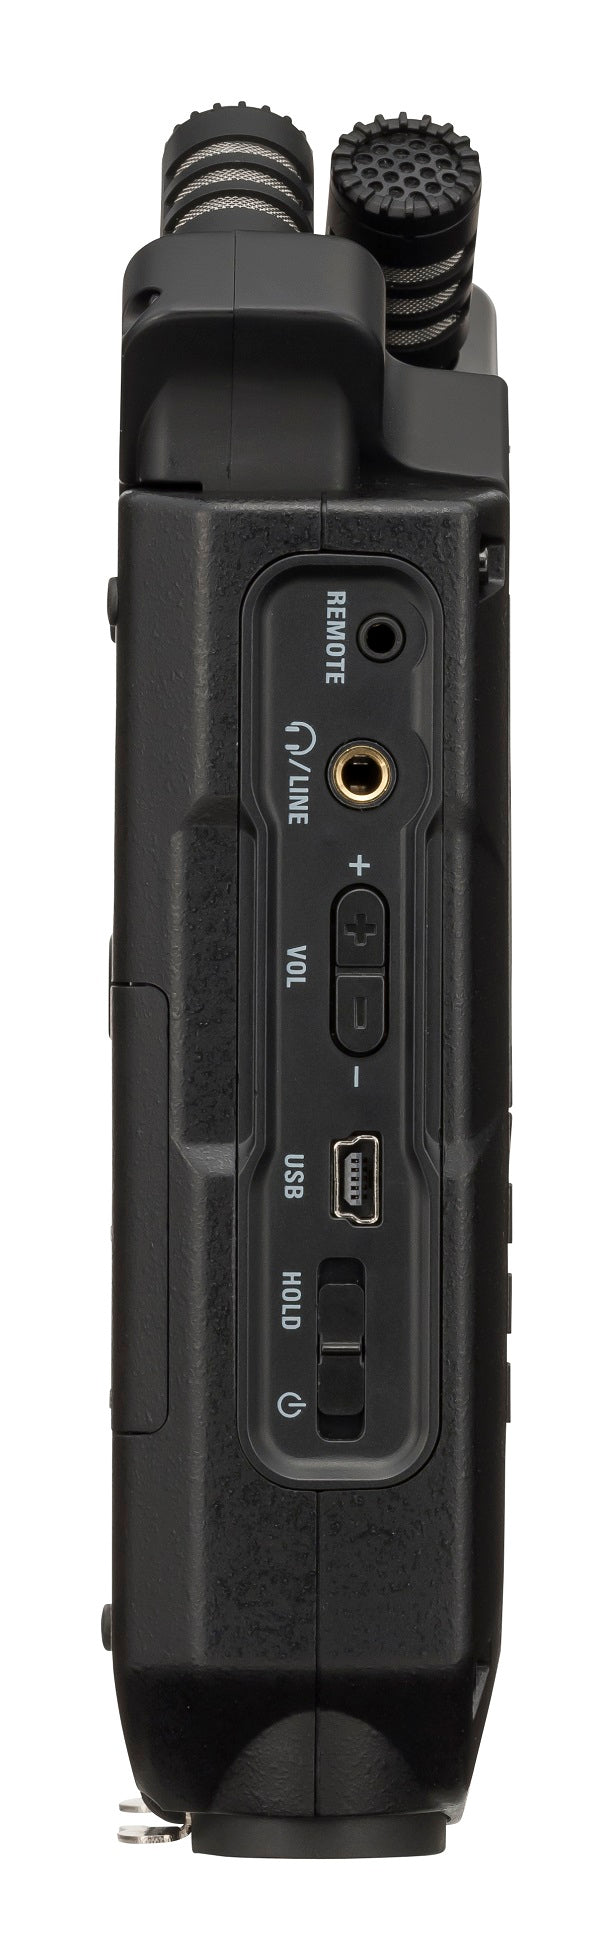 Zoom H4n Pro Black Handy Recorder - Aron Soitin